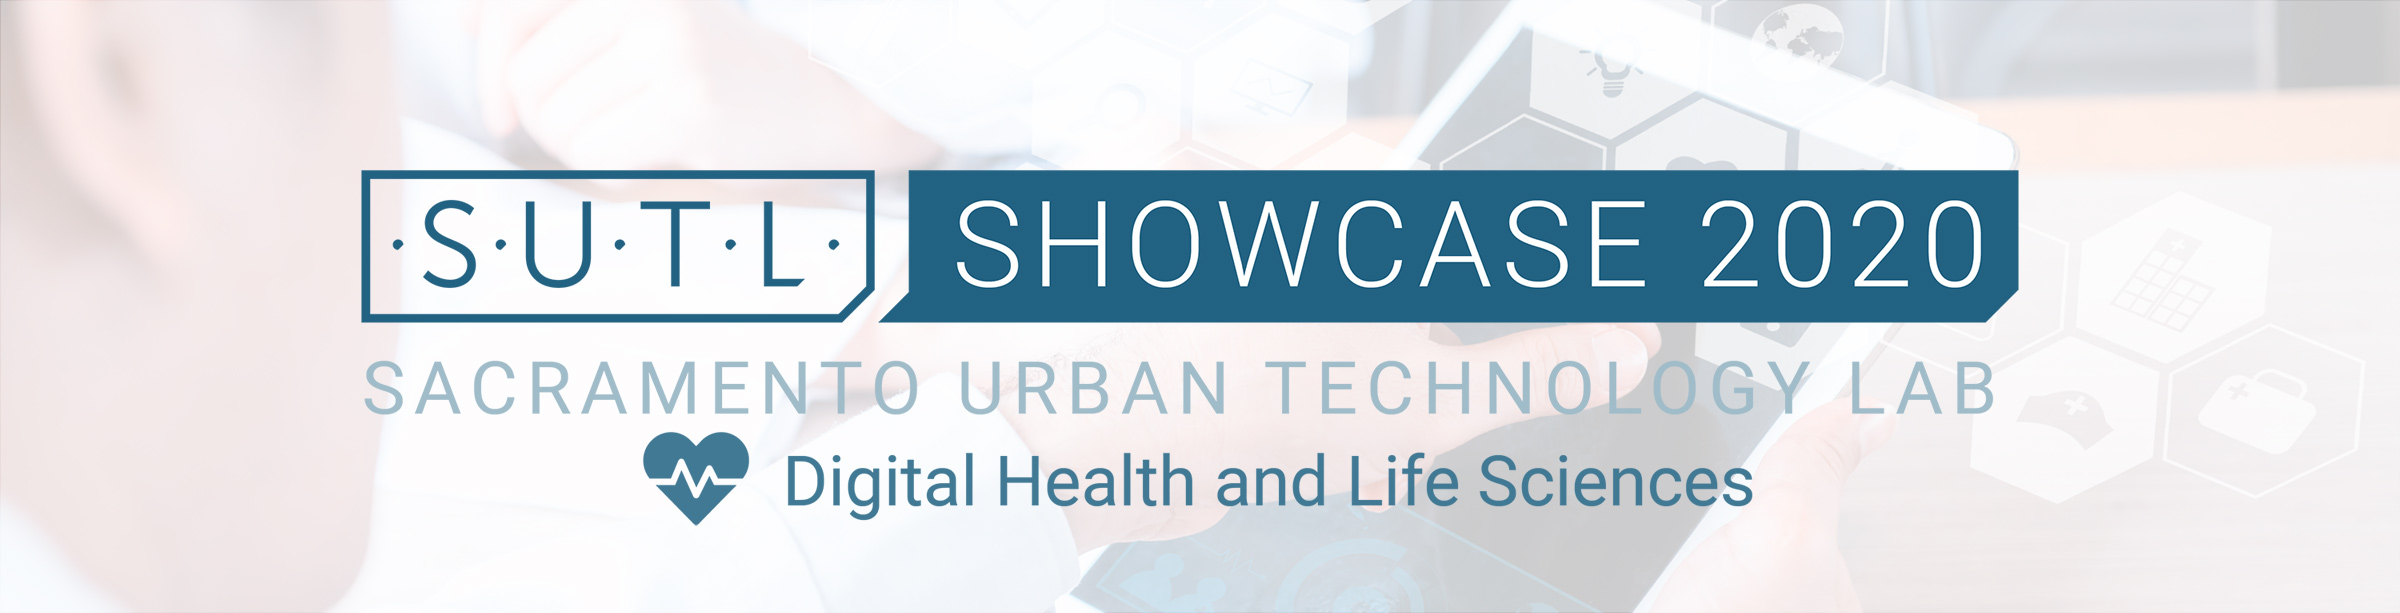 Digital Health and Life Sciences Showcase Event